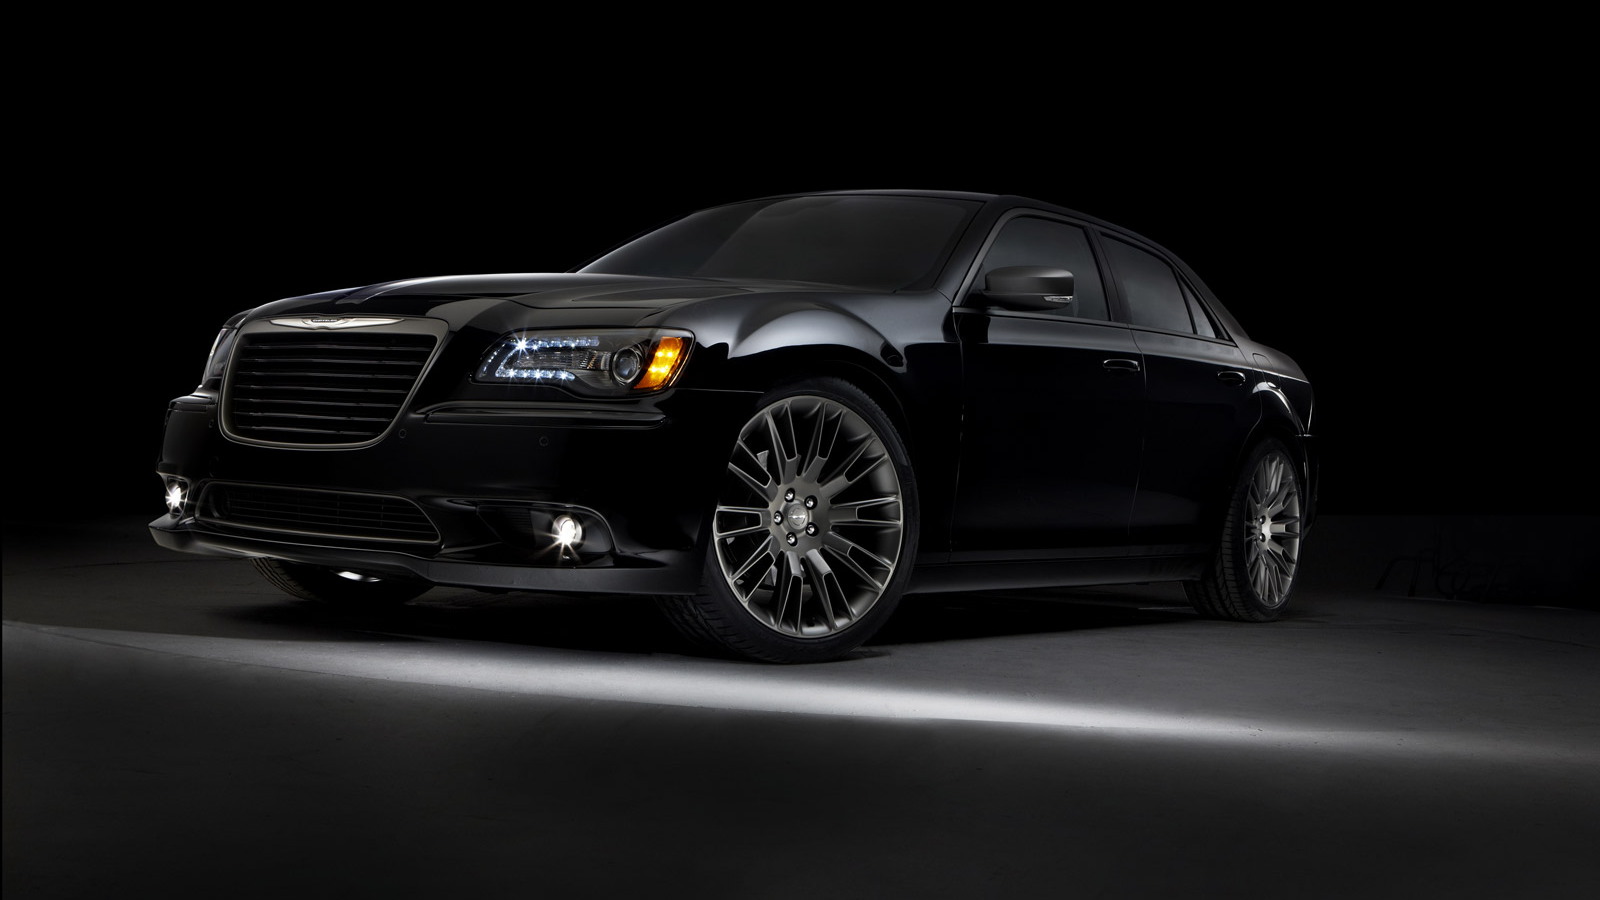 2013 Chrysler 300C John Varvatos Limited Edition